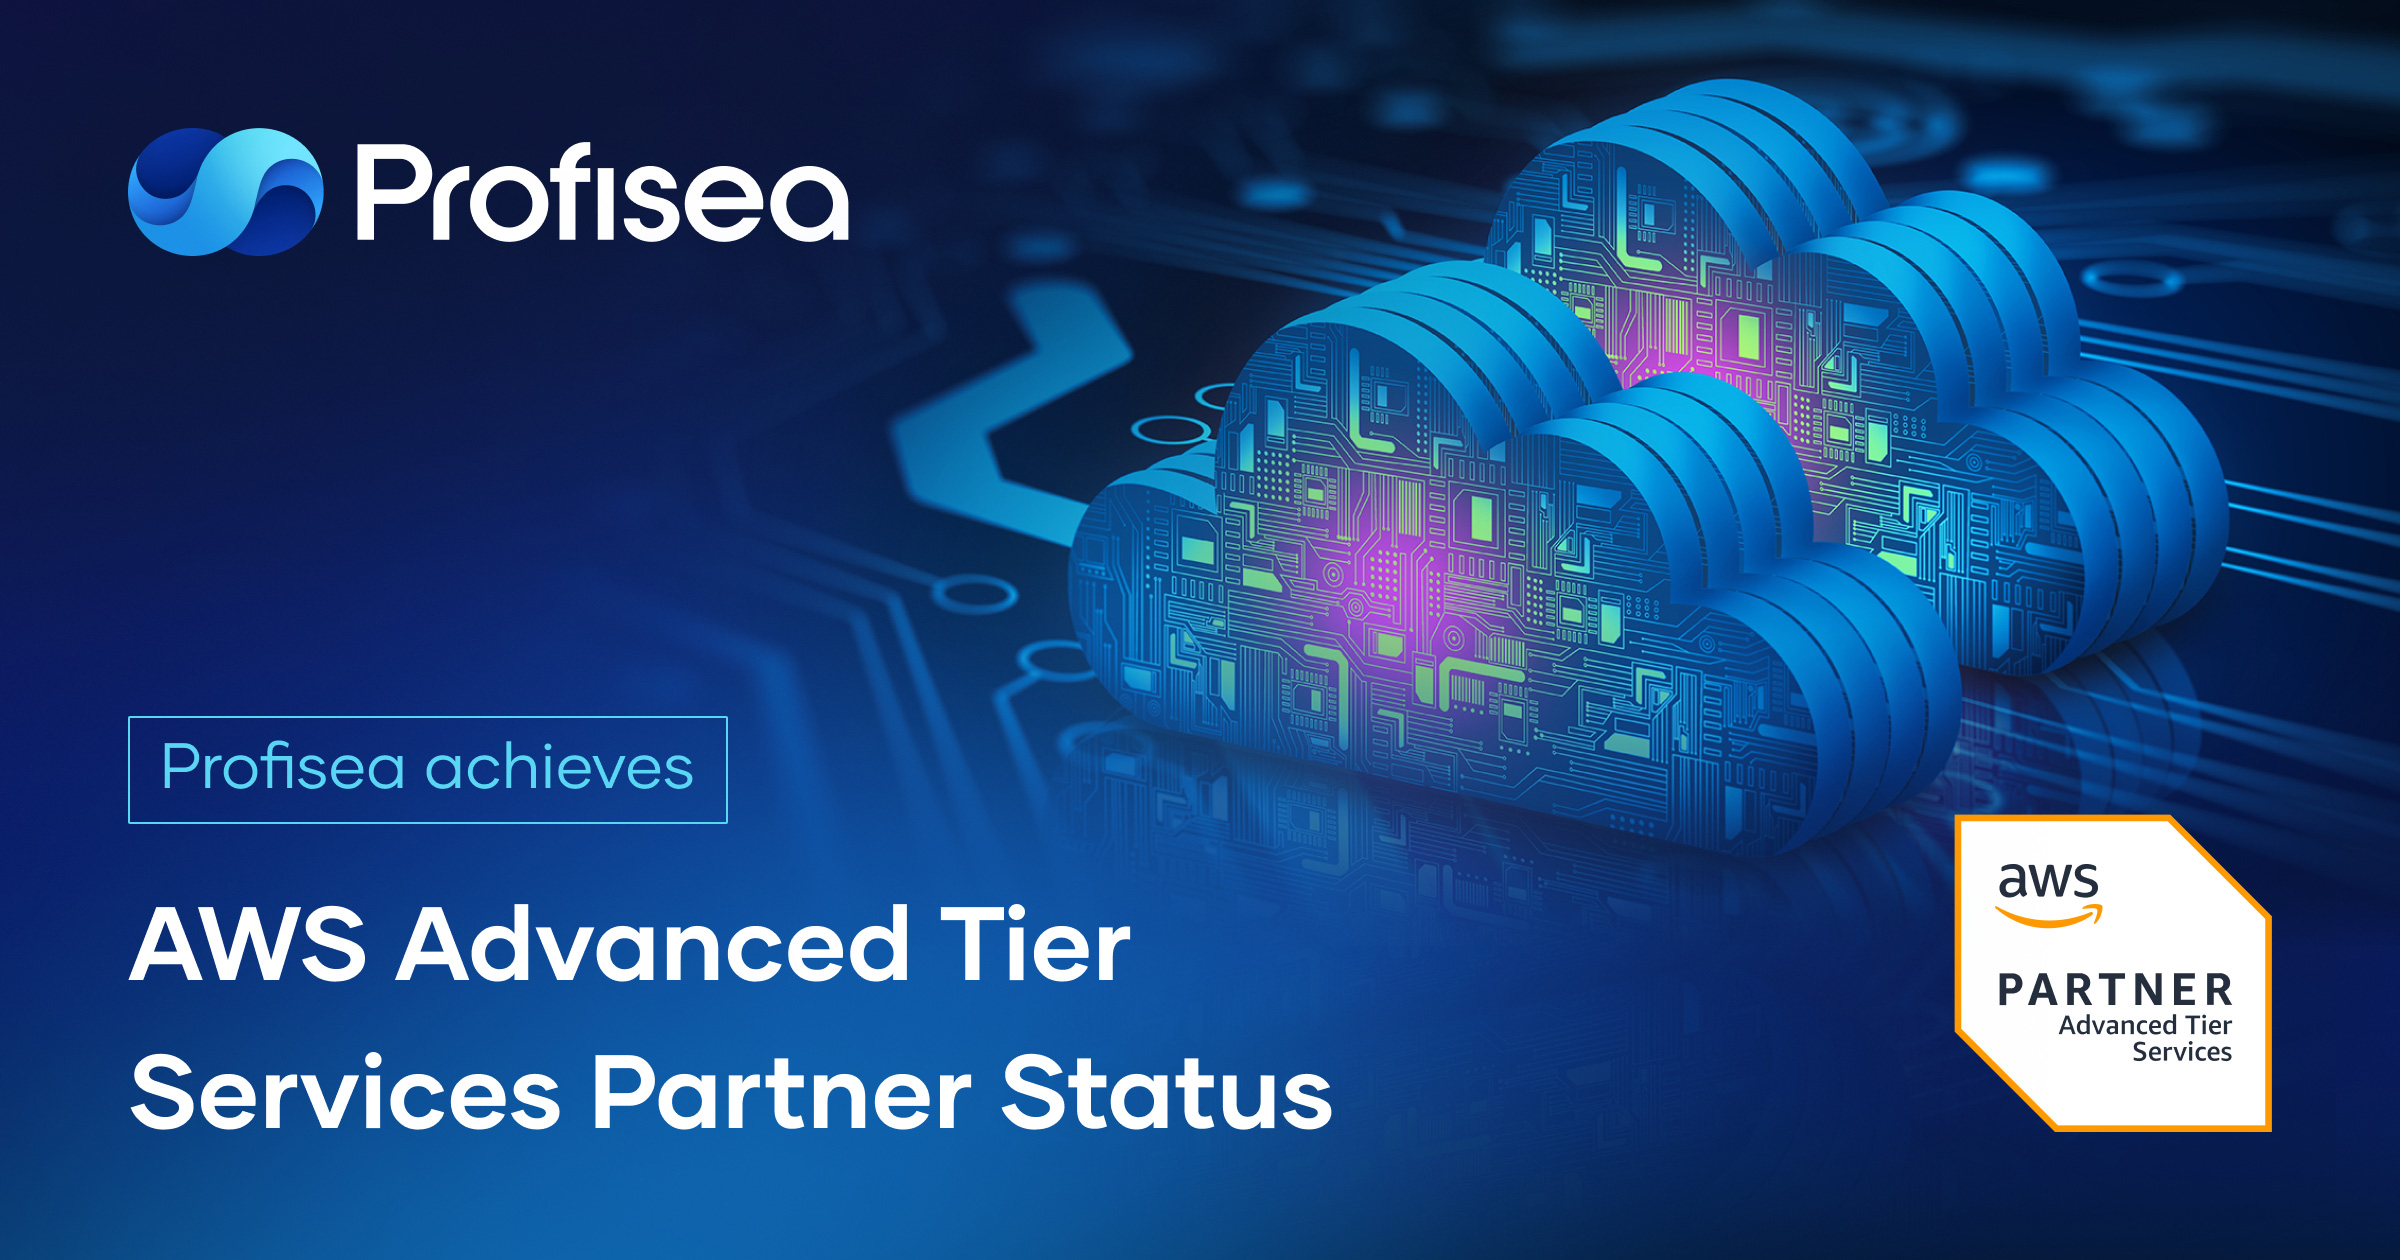 Profisea achieves AWS Advanced Tier Services Partner Status